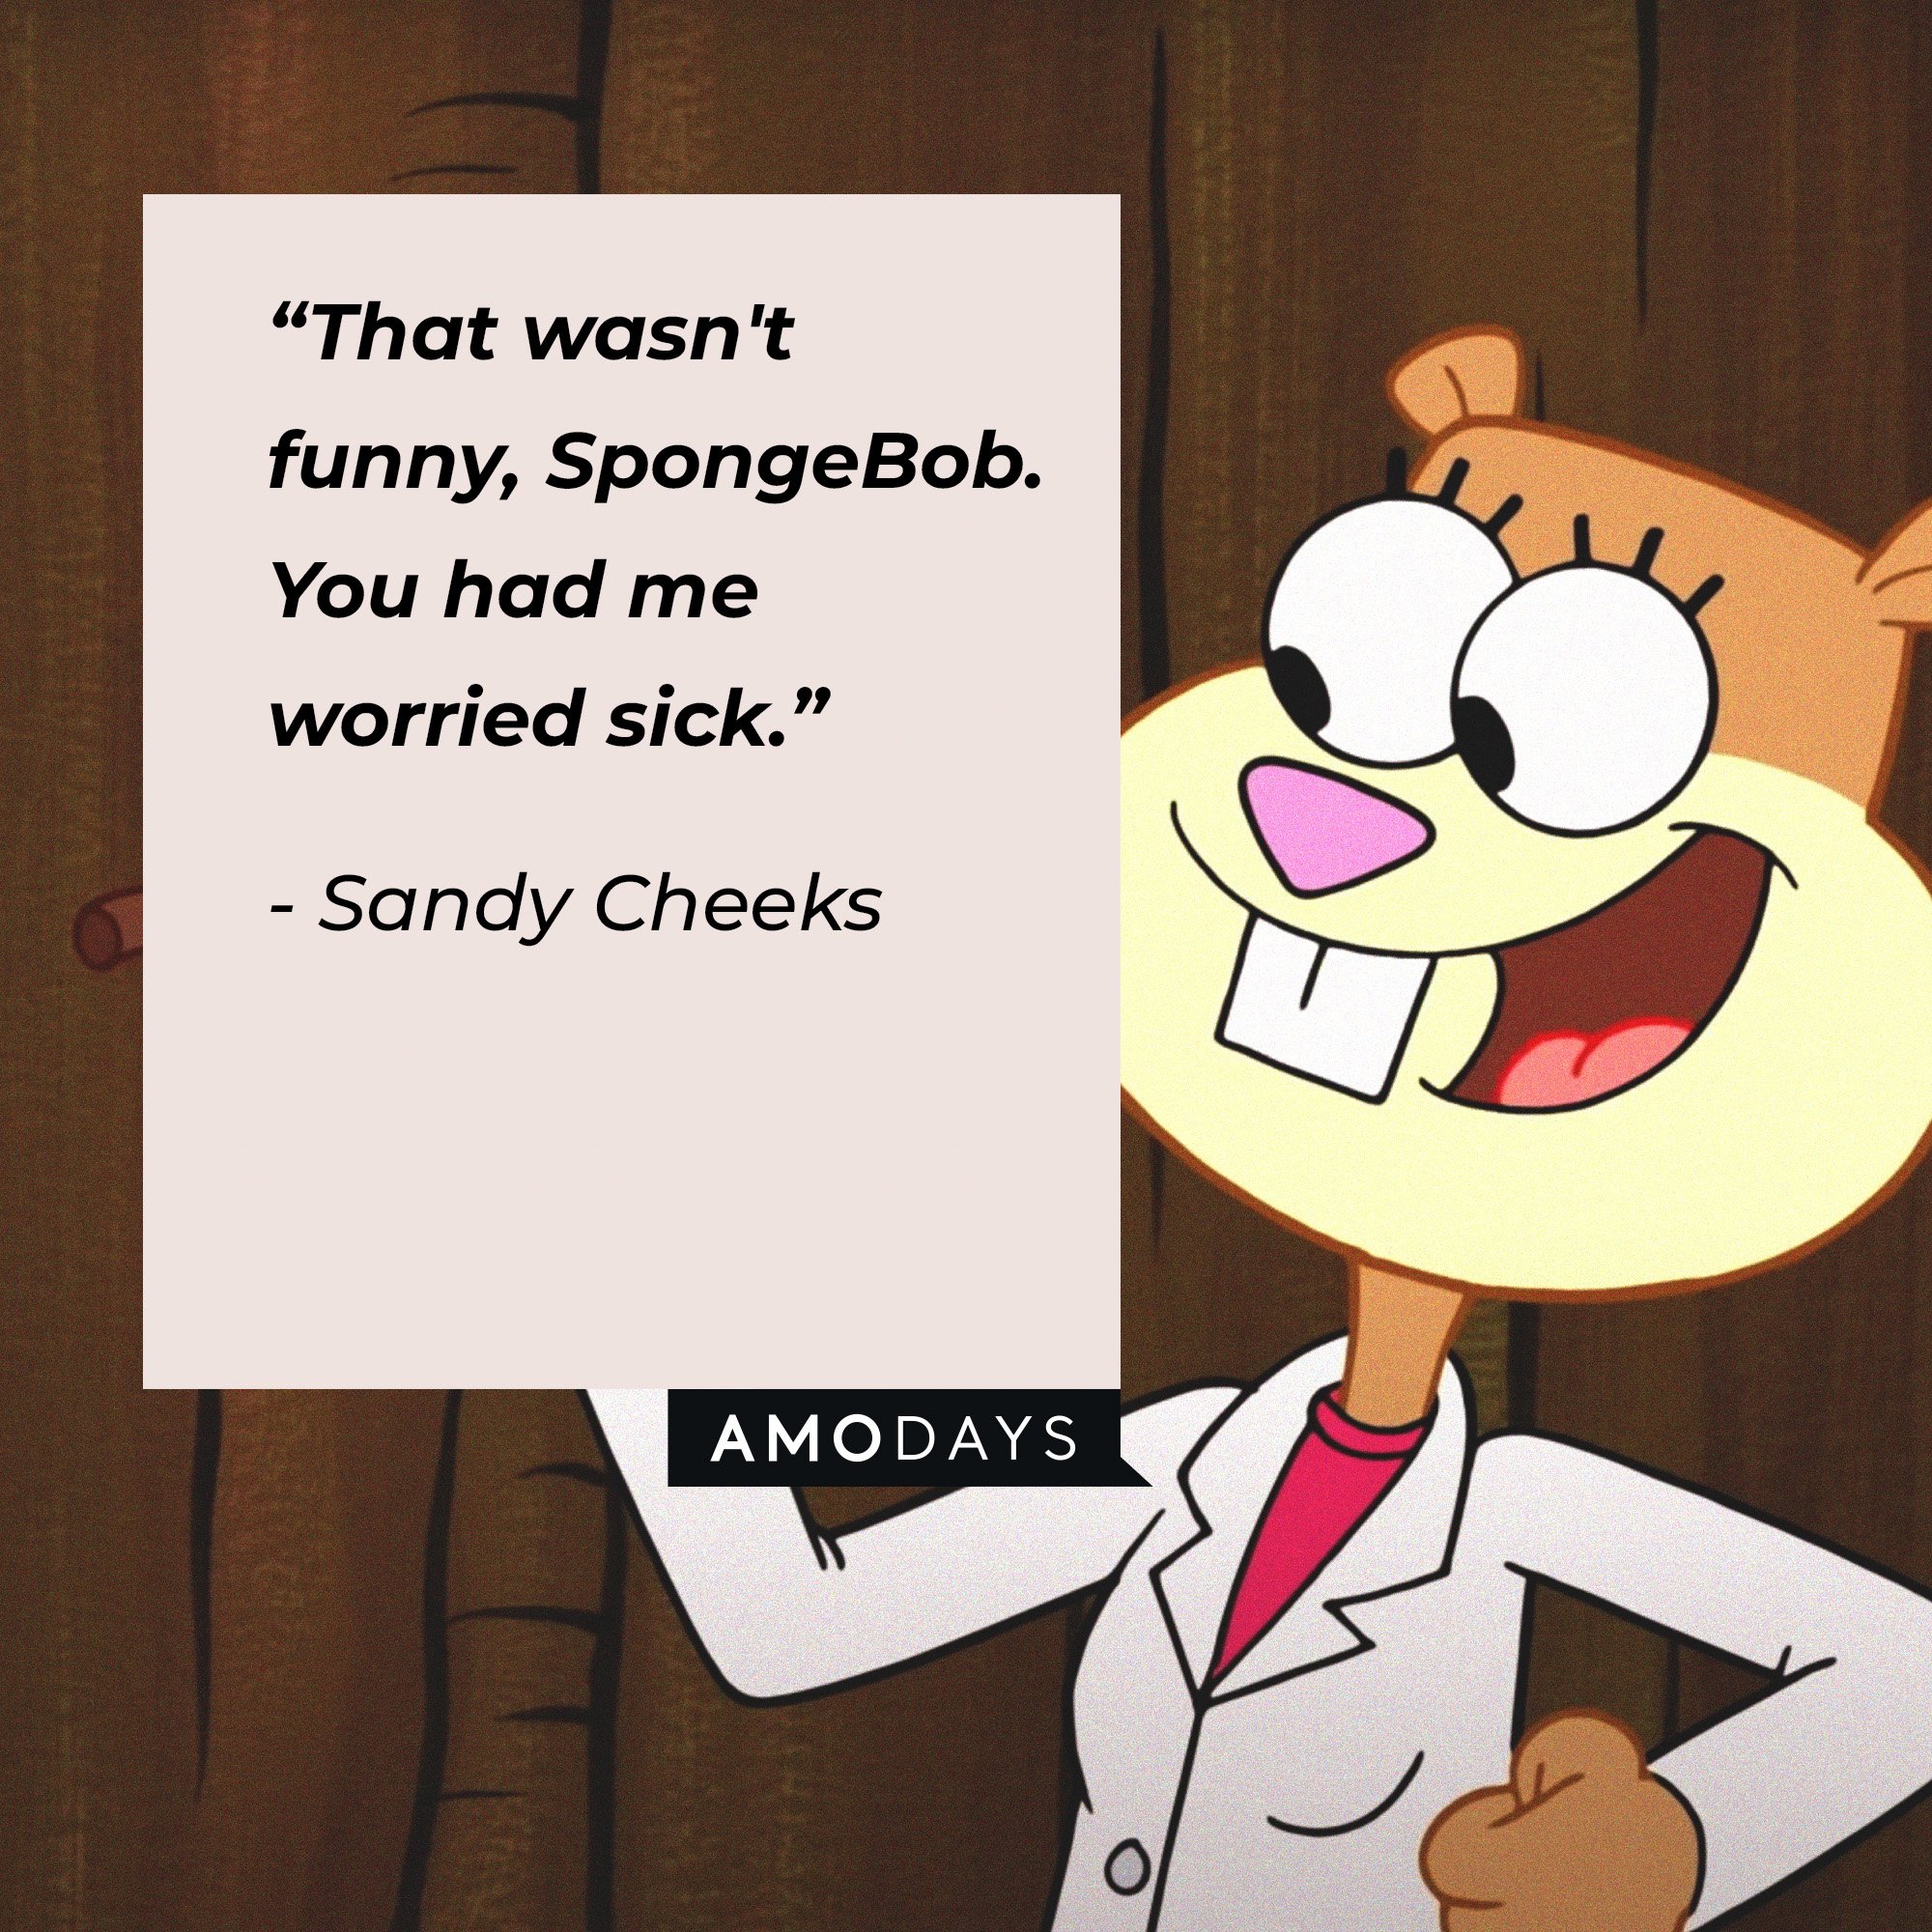 Sandy Cheeks's quote: “That wasn't funny, SpongeBob. You had me worried sick.” | Image: AmoDays 